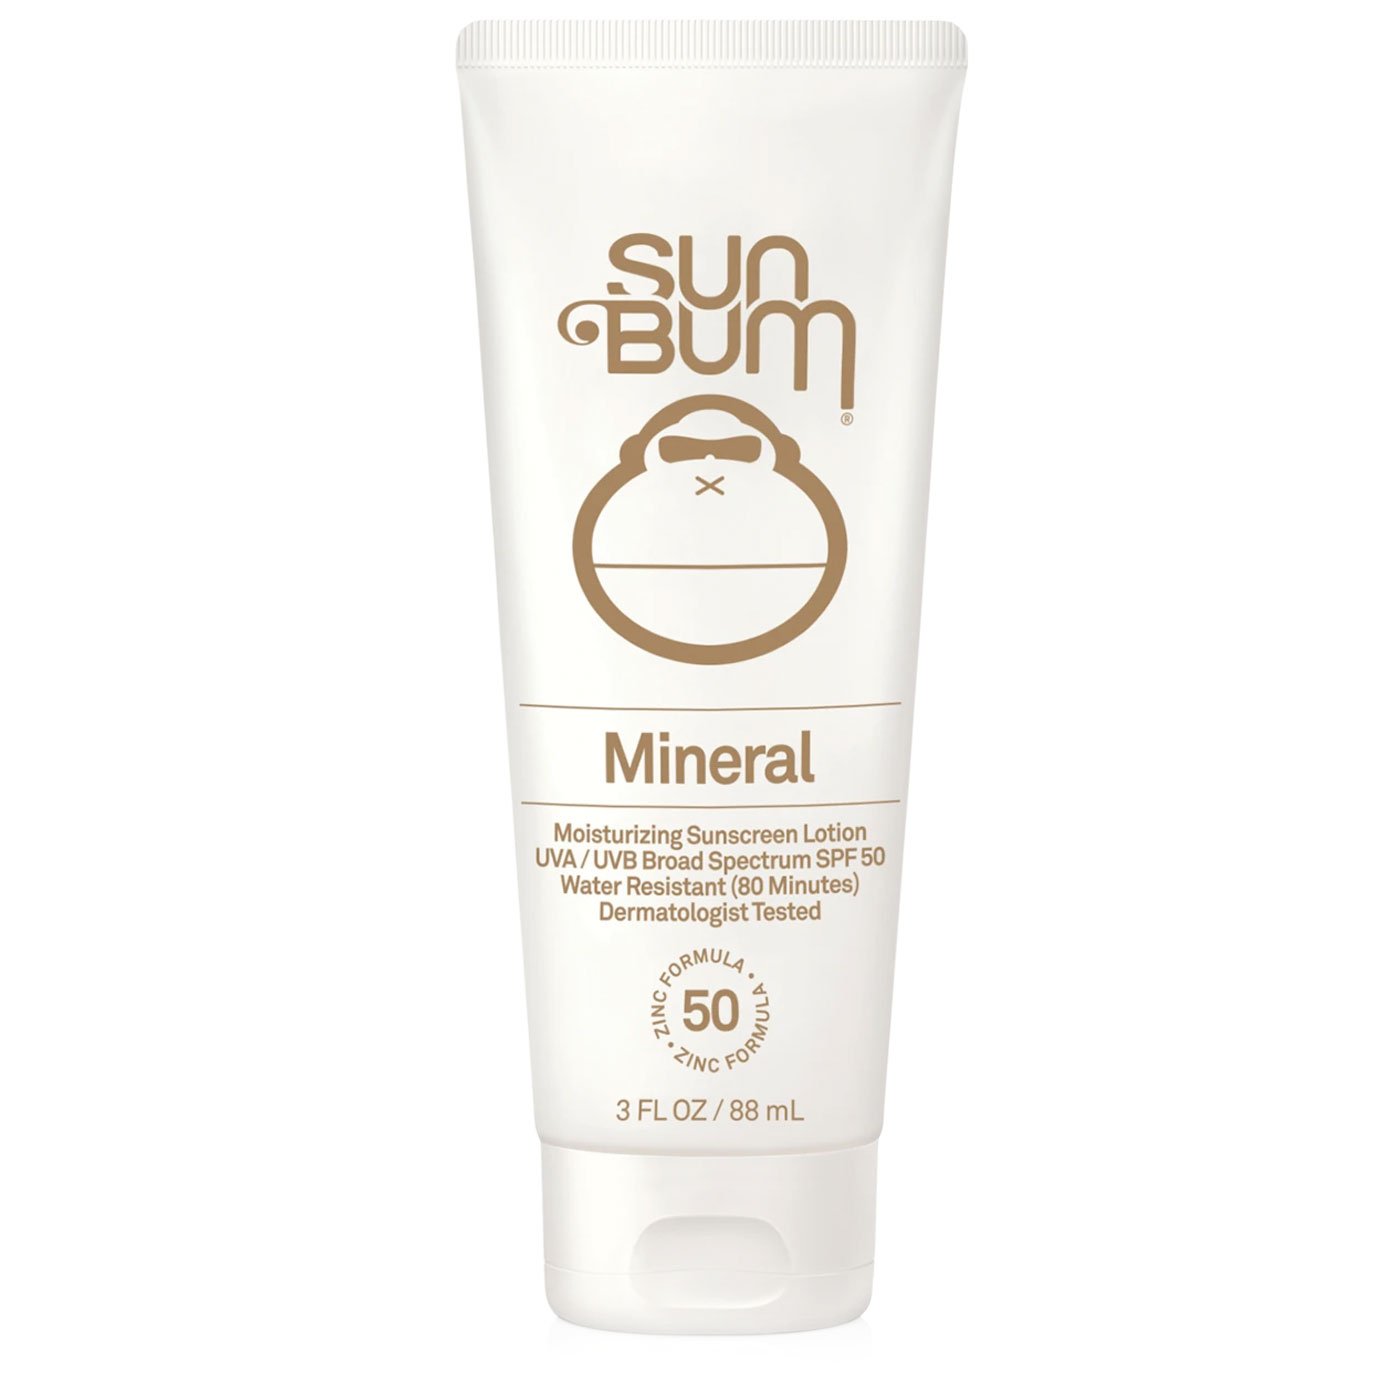 Sun Bum Mineral Sunscreen 3oz Lotion - SPF 50